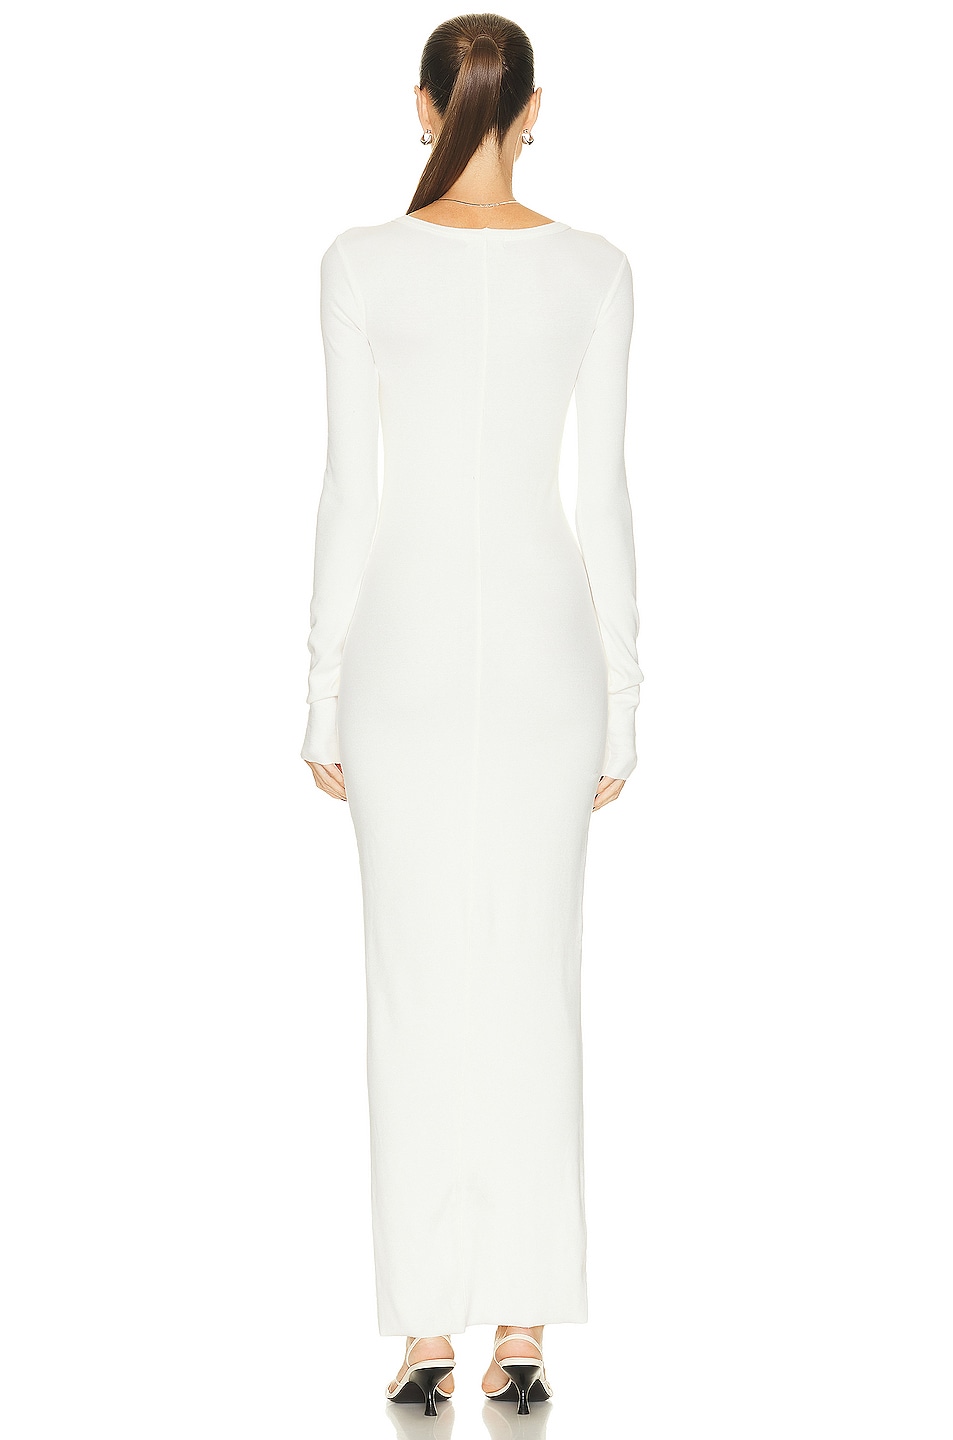 Eterne Long Sleeve Crewneck Maxi Dress in Cream | FWRD